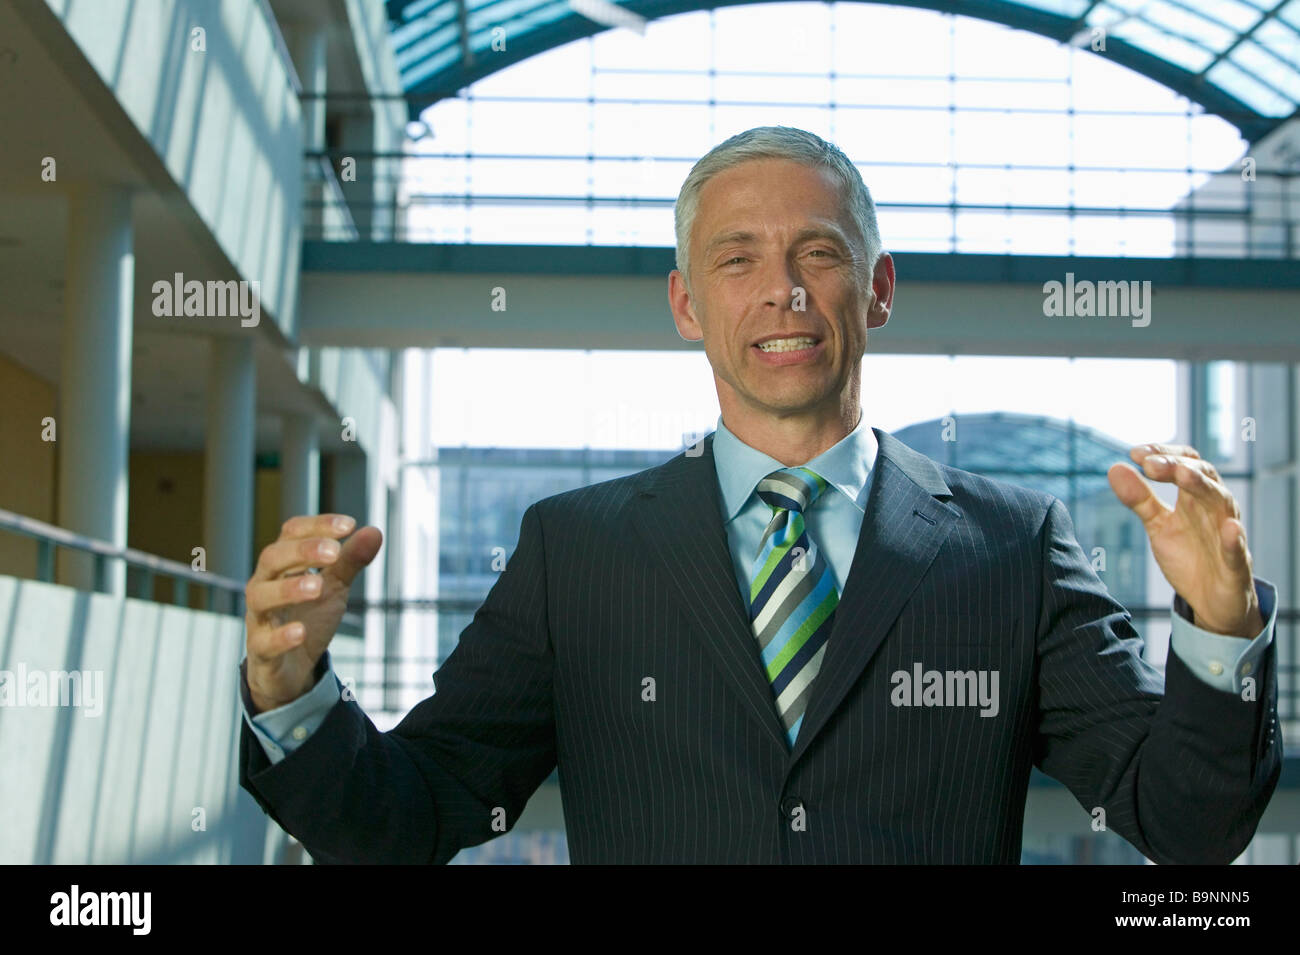 portrait of mature businessman making explanatory gesture Stock Photo